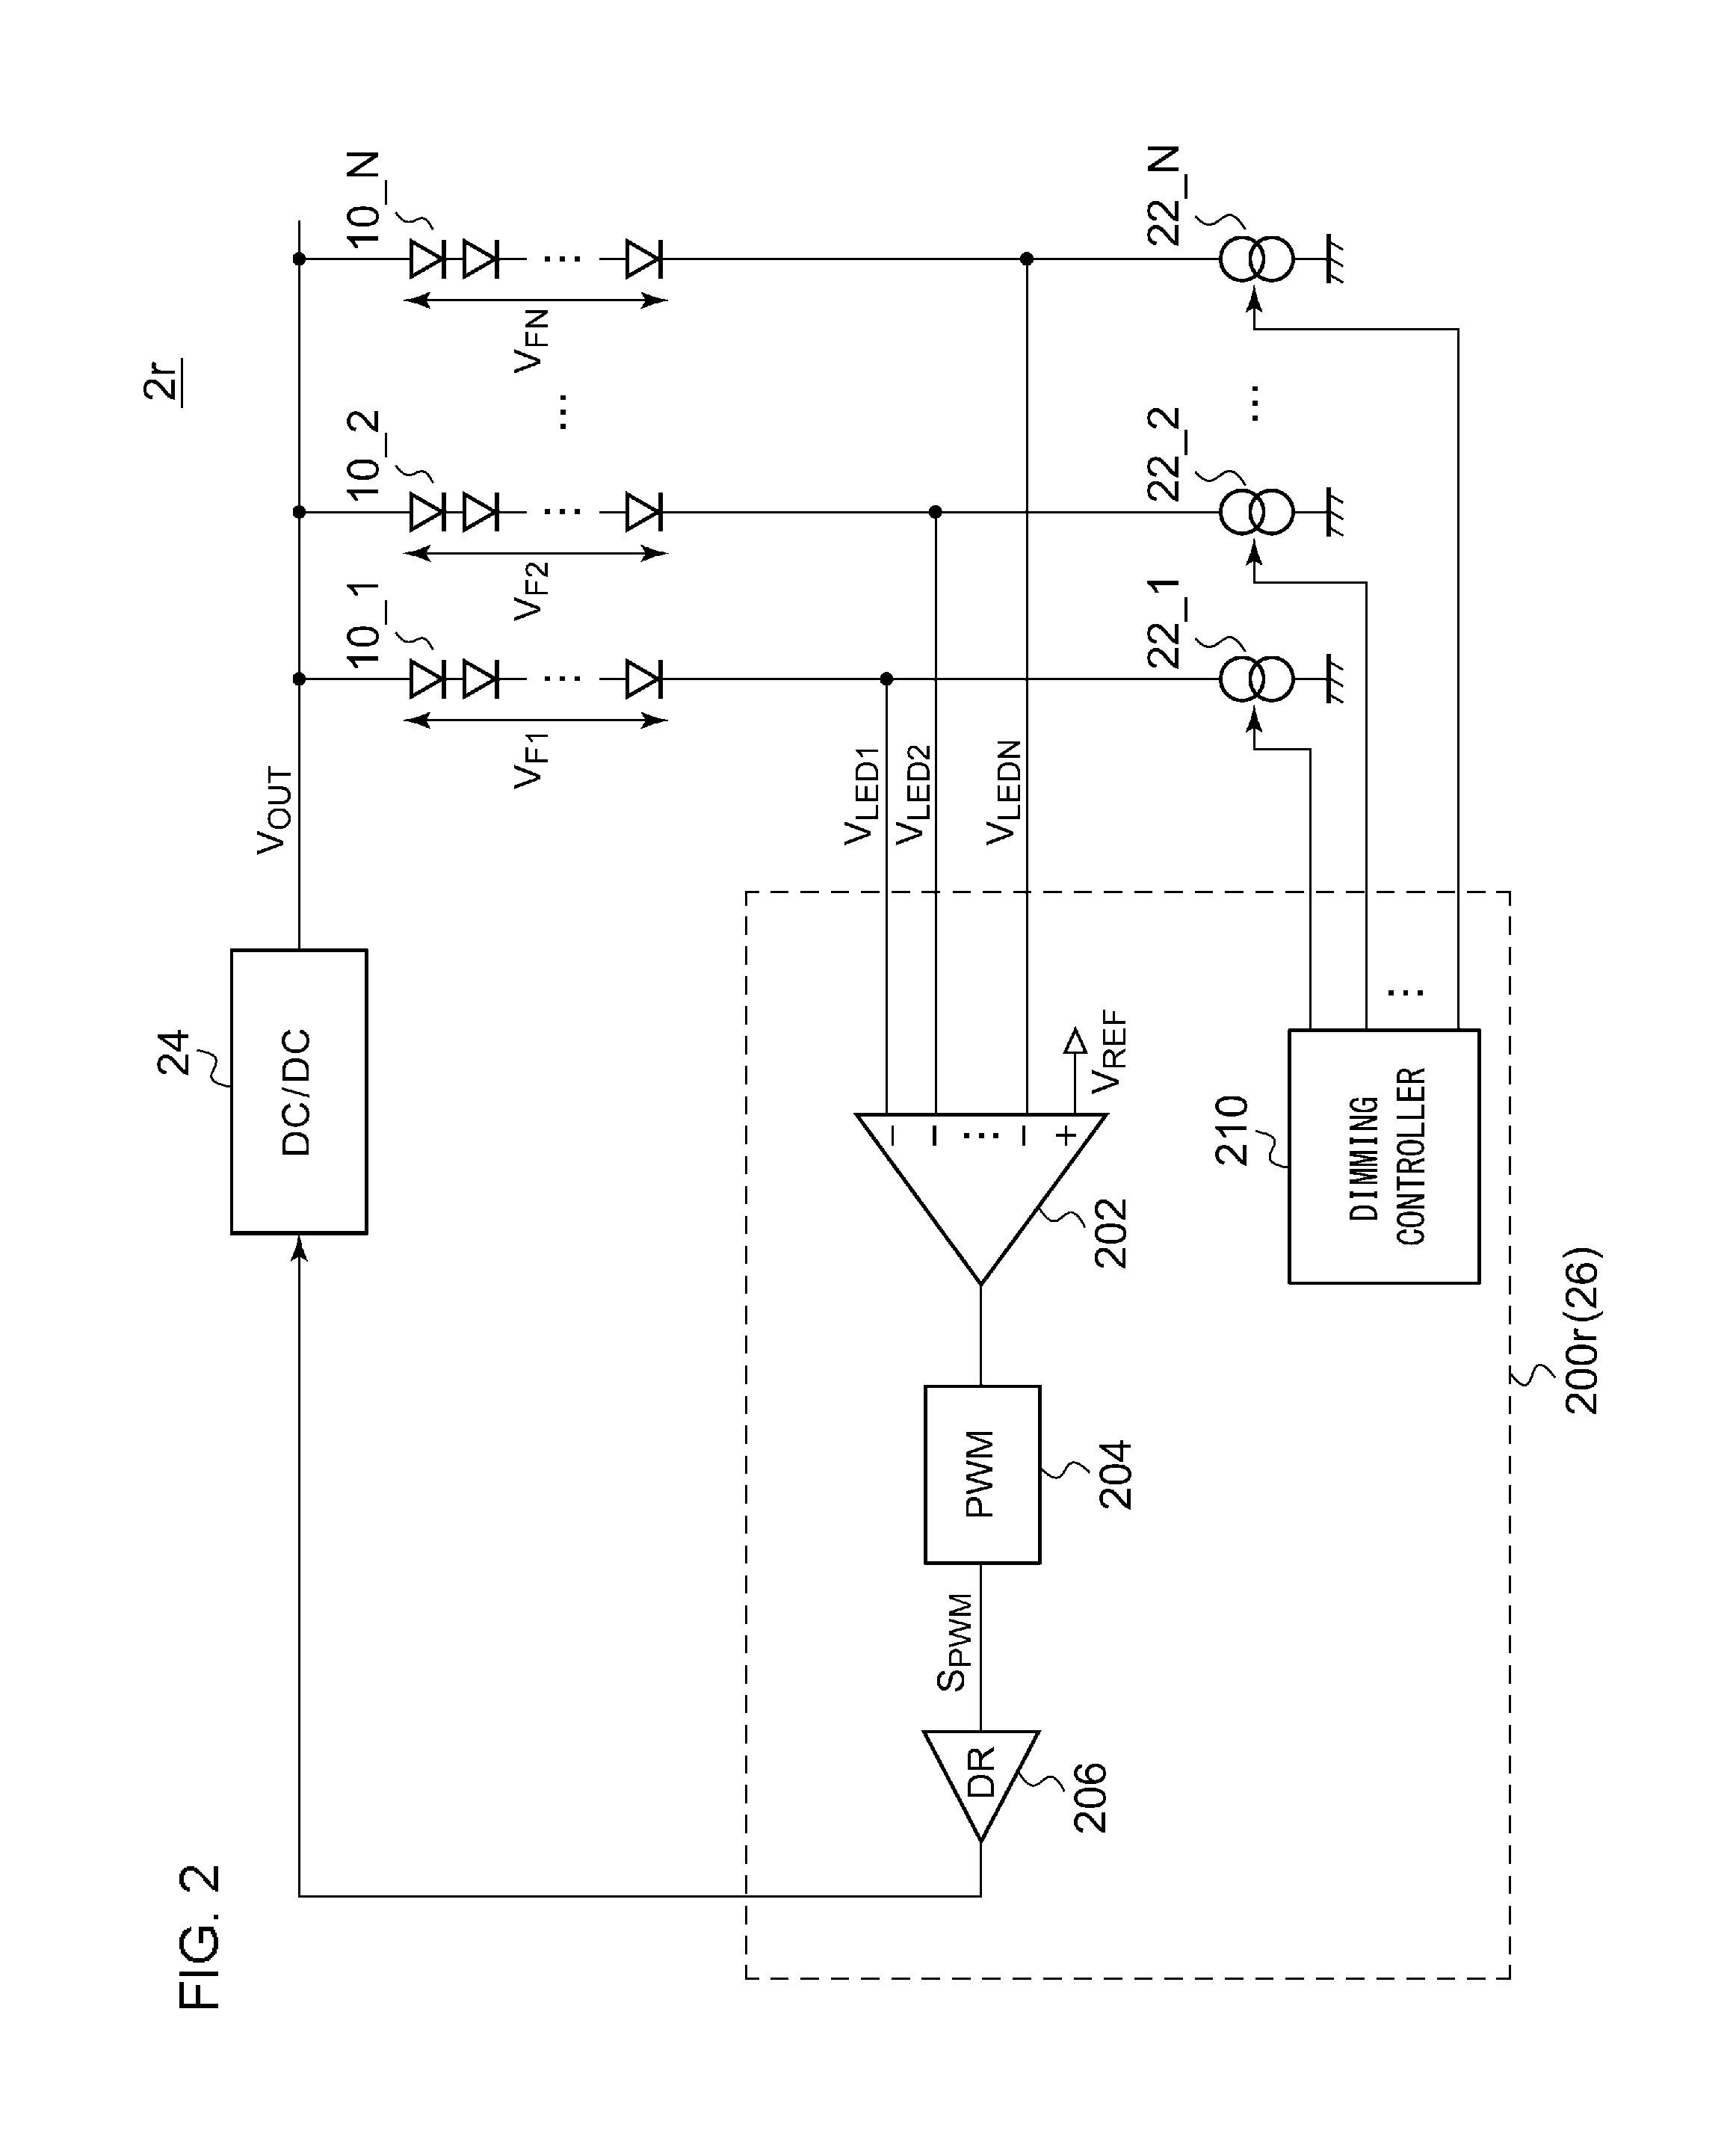 Control circuit and control method for illumination apparatus